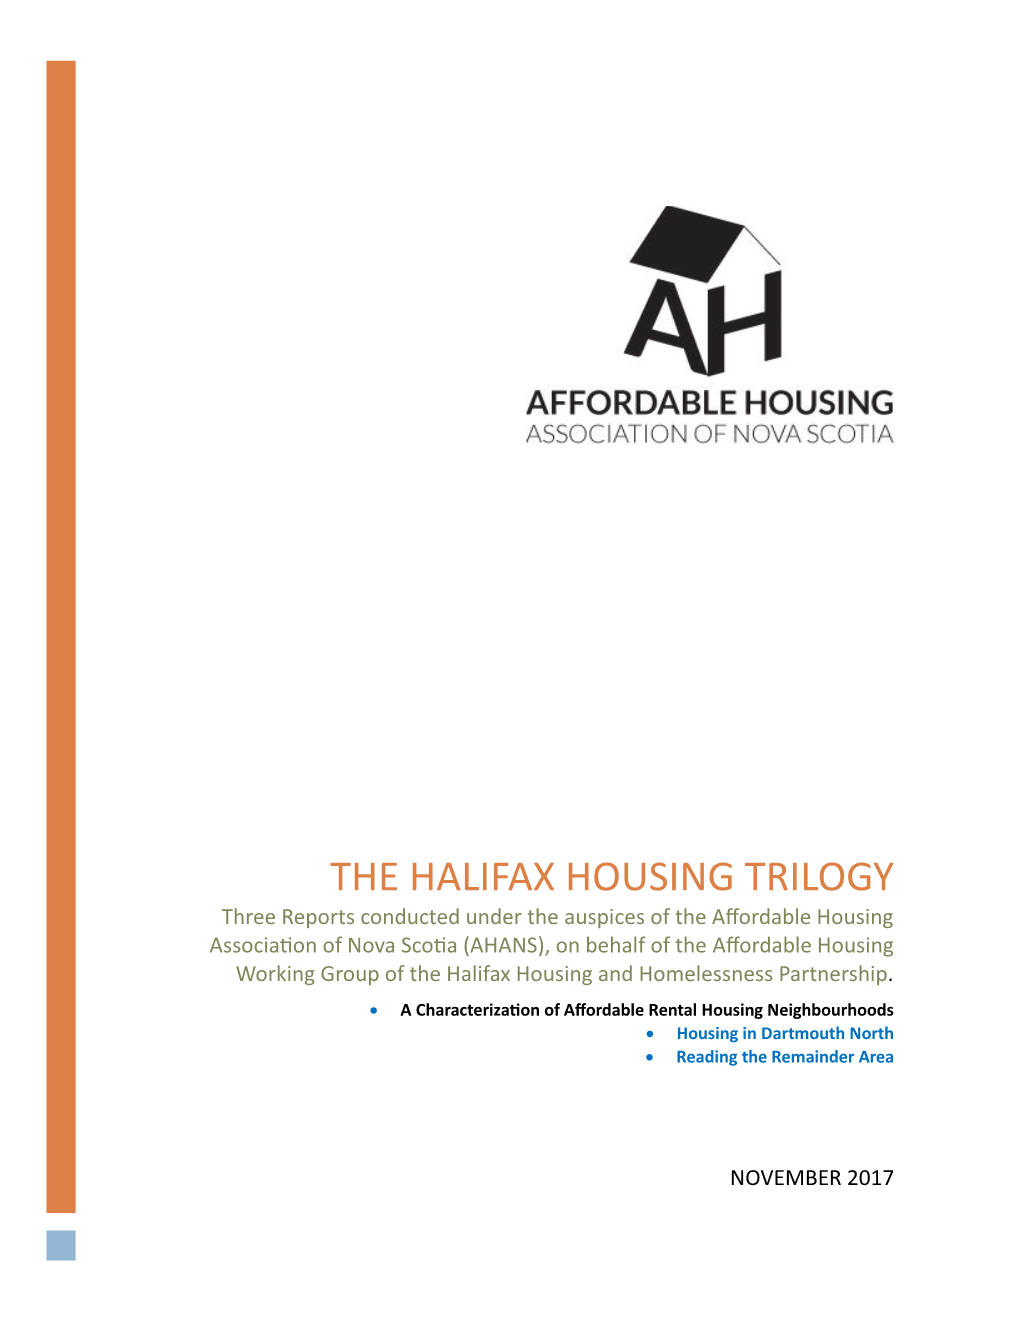 The Halifax Housing Trilogy